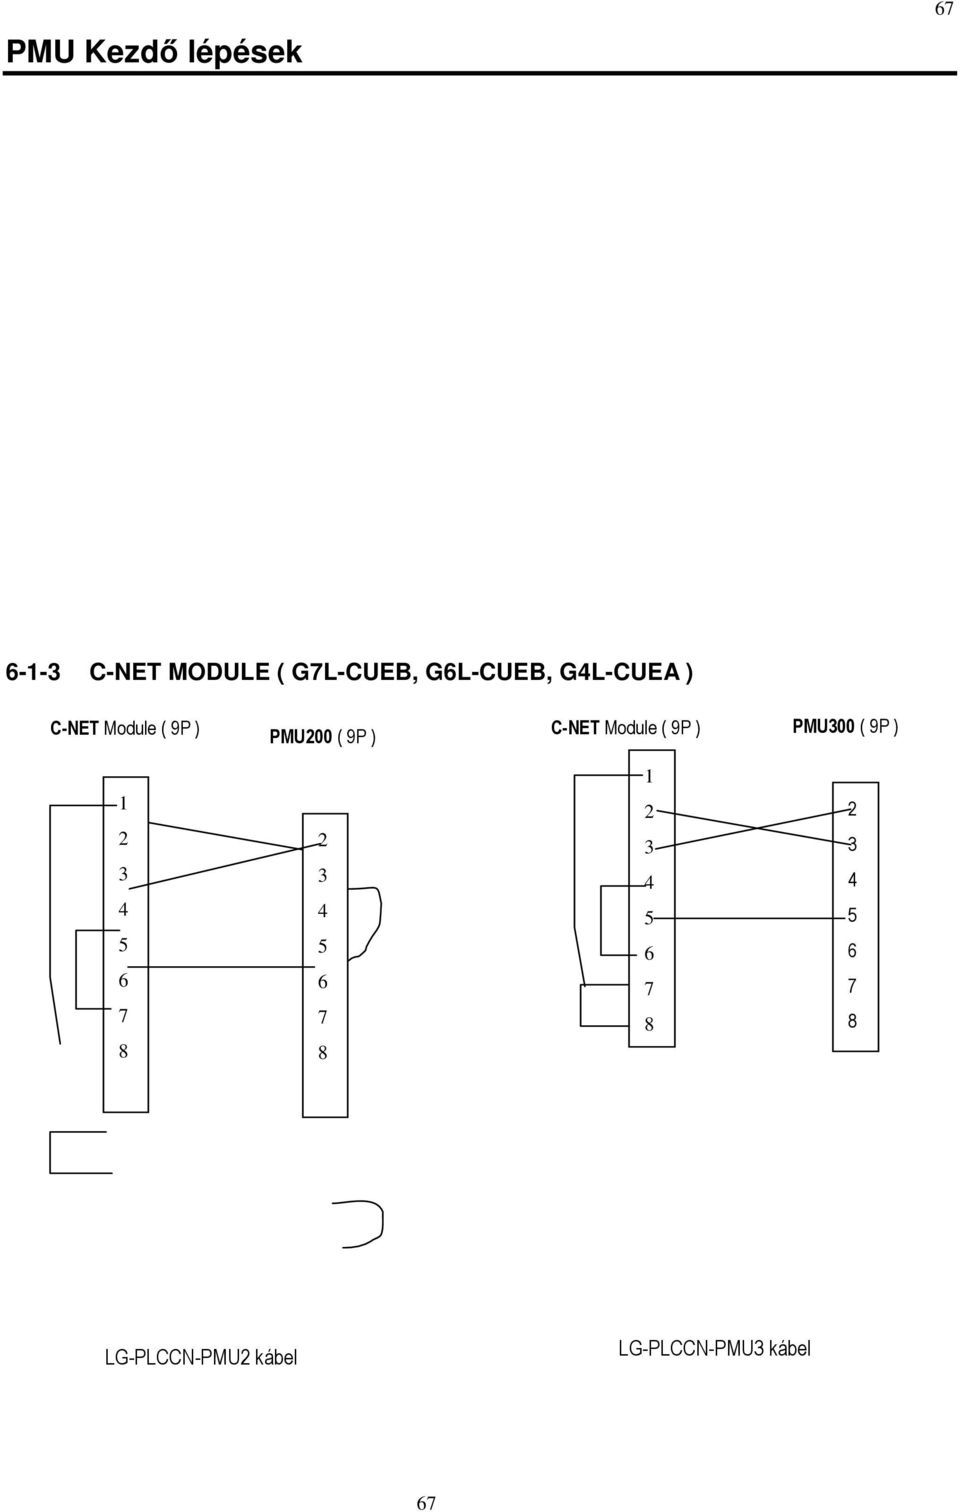 ) C-NET Module ( 9P ) PMU00 ( 9P ) 1 8 8